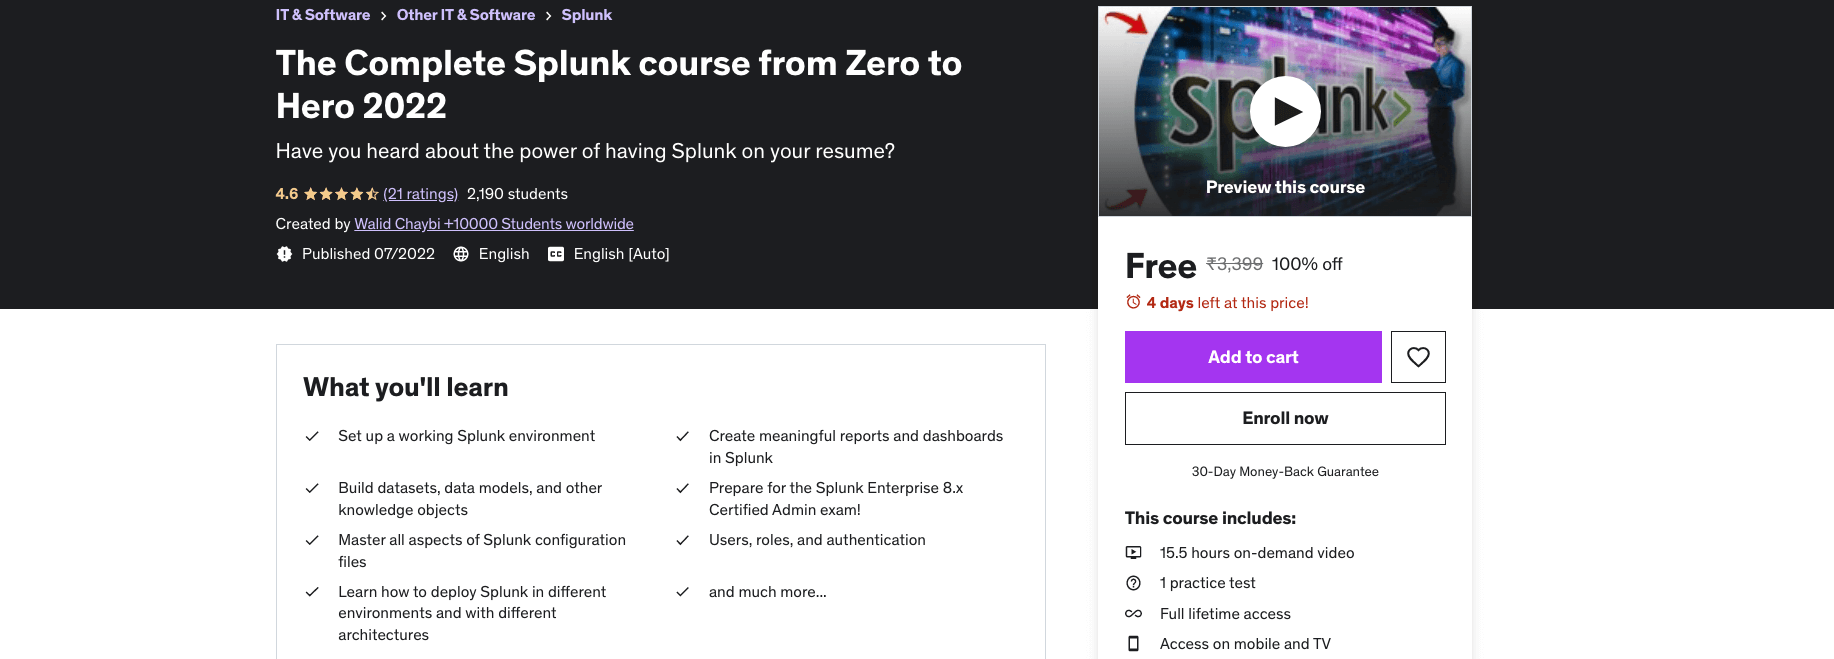 The Complete Splunk course from Zero to Hero 2022